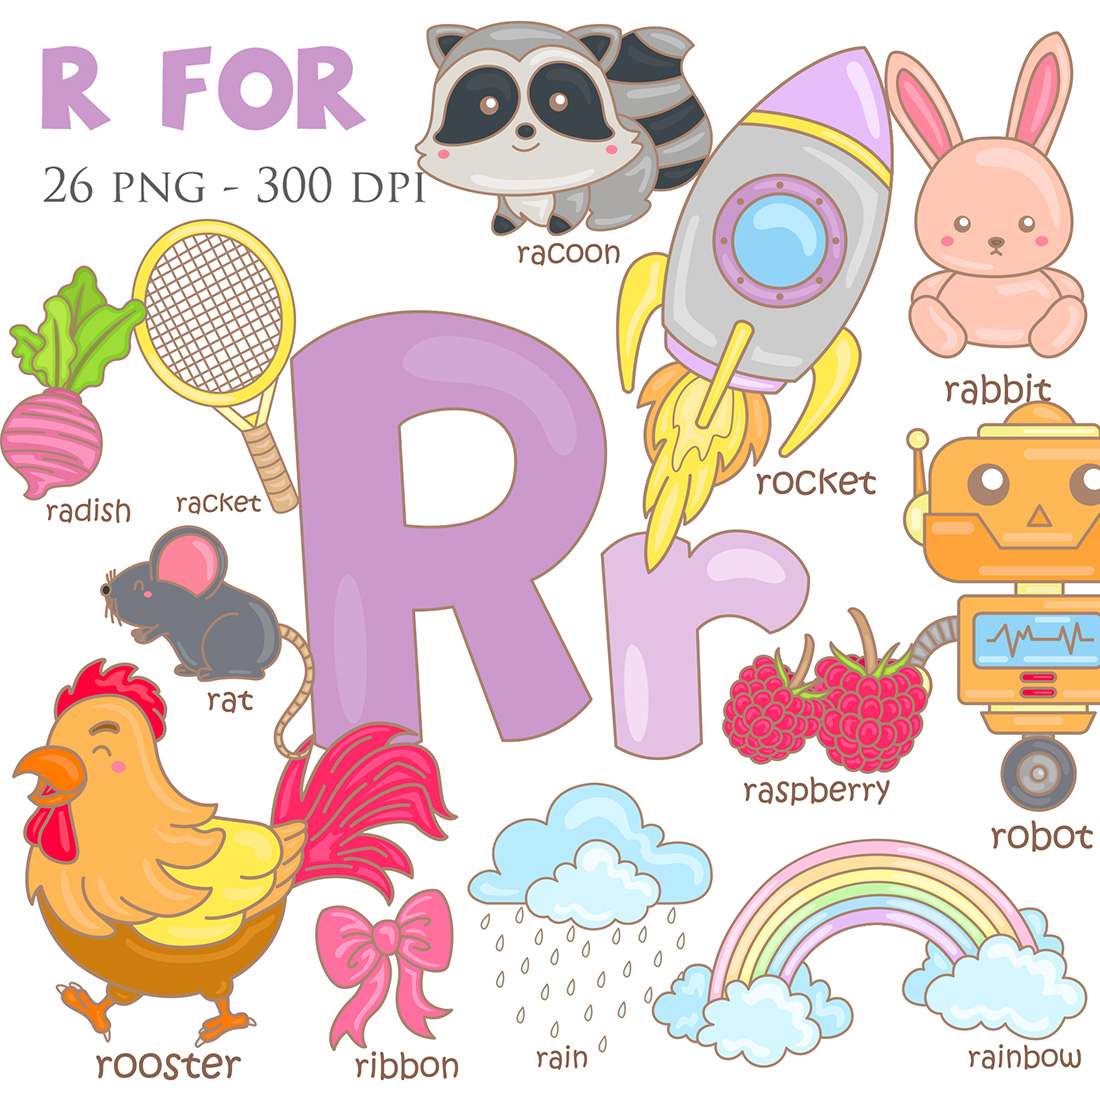 Alphabet R For Vocabulary School Lesson Rocket Robot Rat Rabbit Radish Ribbon Racoon Racket Rainbow Raspberry Rain Rooster Illustration Vector Clipart Cartoon cover image.